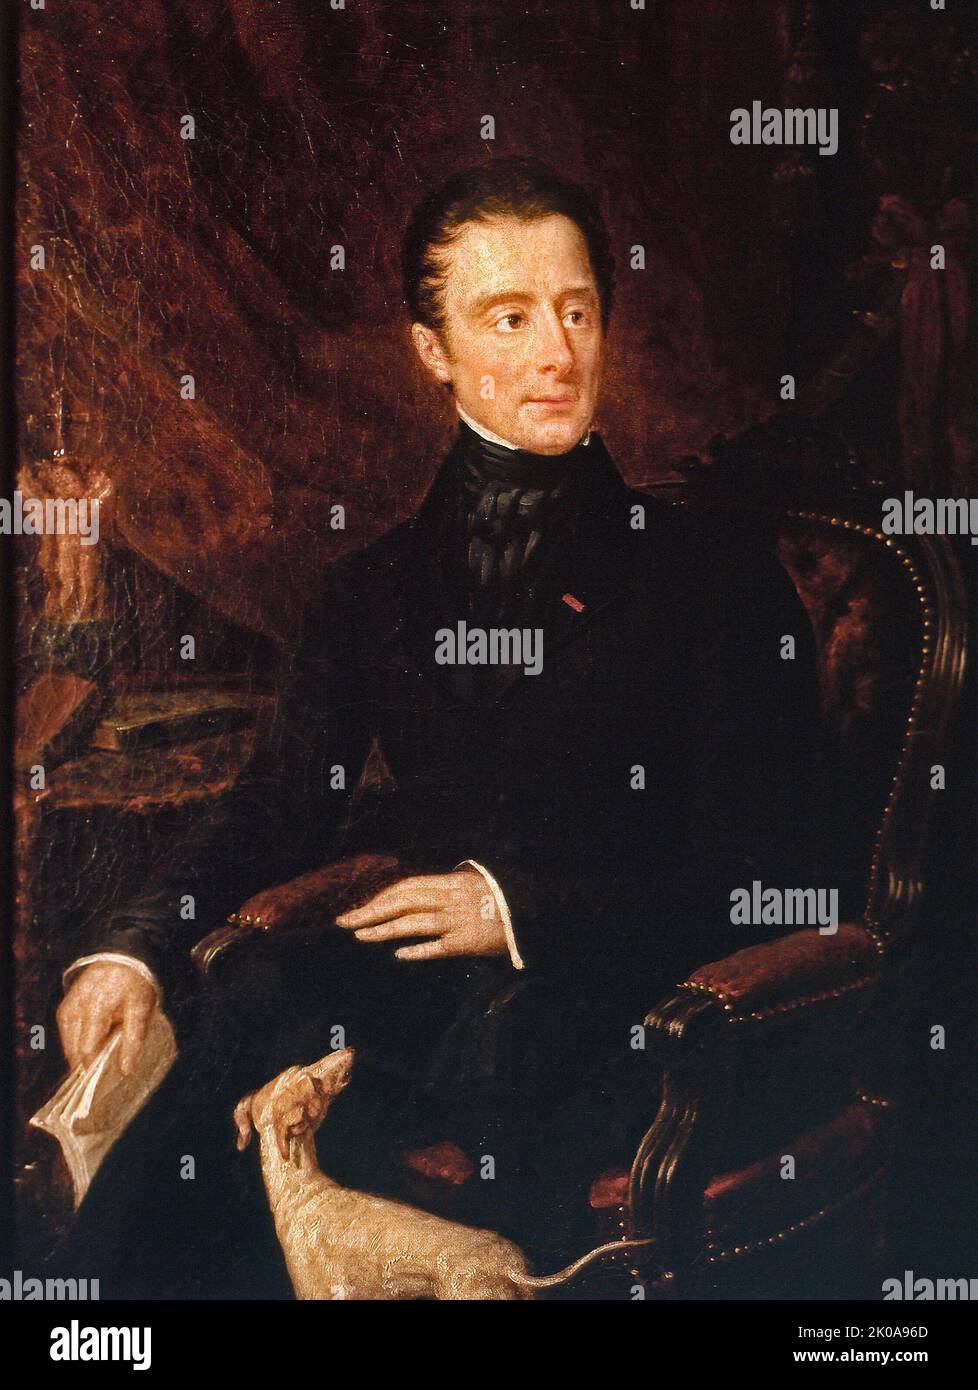 Portrait of Alphonse de Lamartine (1790-1869), poet and politician, c1840. Stock Photo